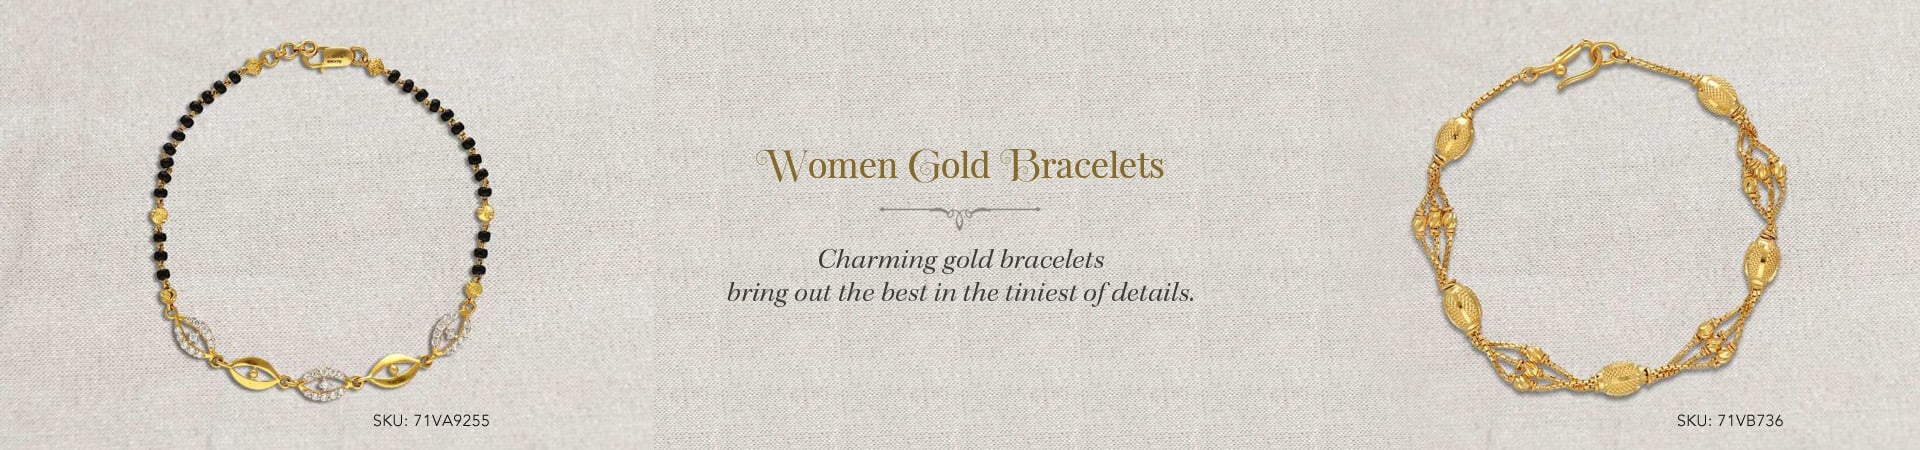 TOP 20 Gold Bracelet Designs For Women - Style Pro - YouTube